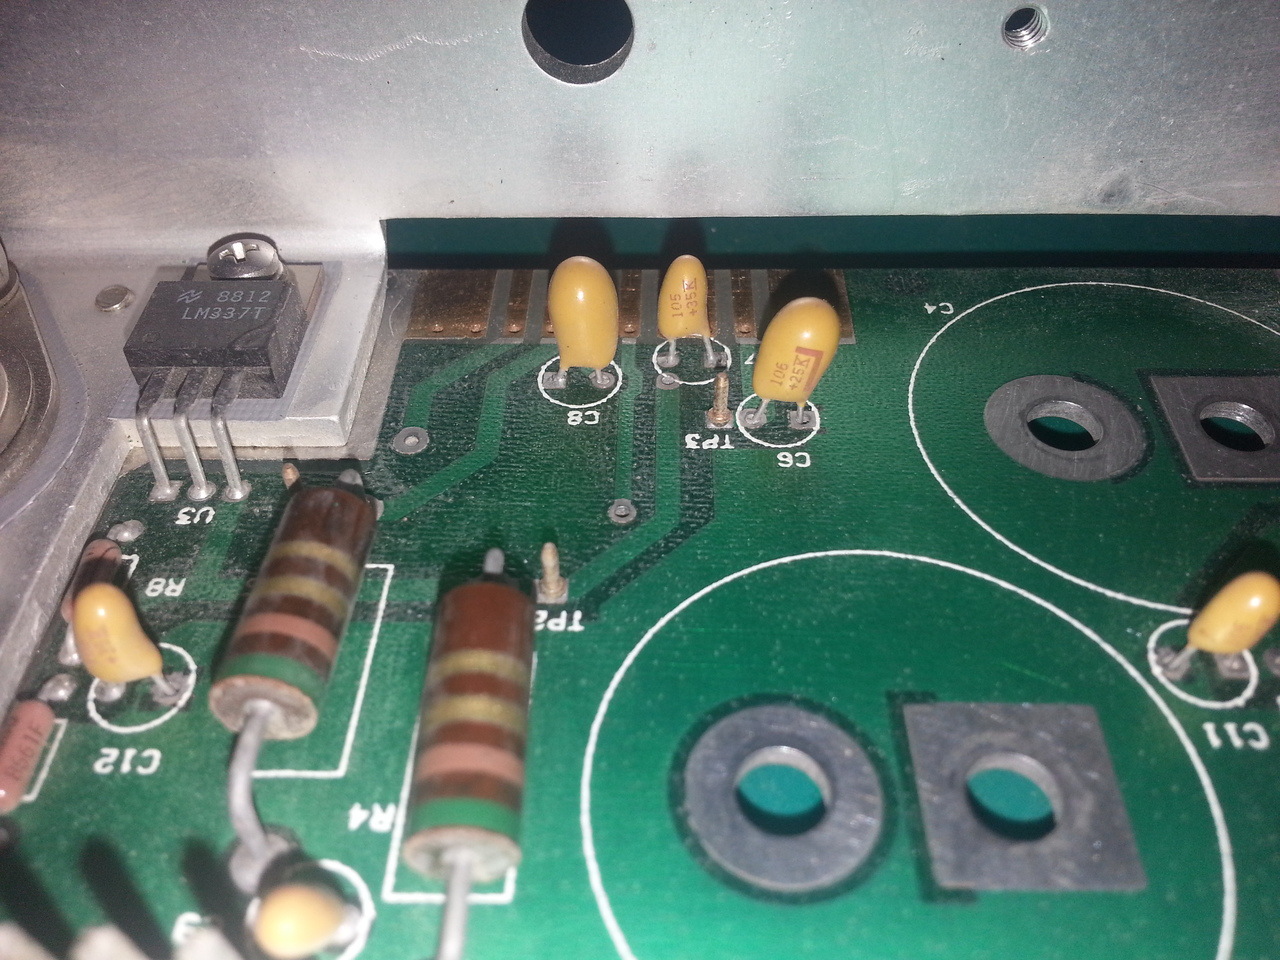 Tantalum capacitors on the PSU board